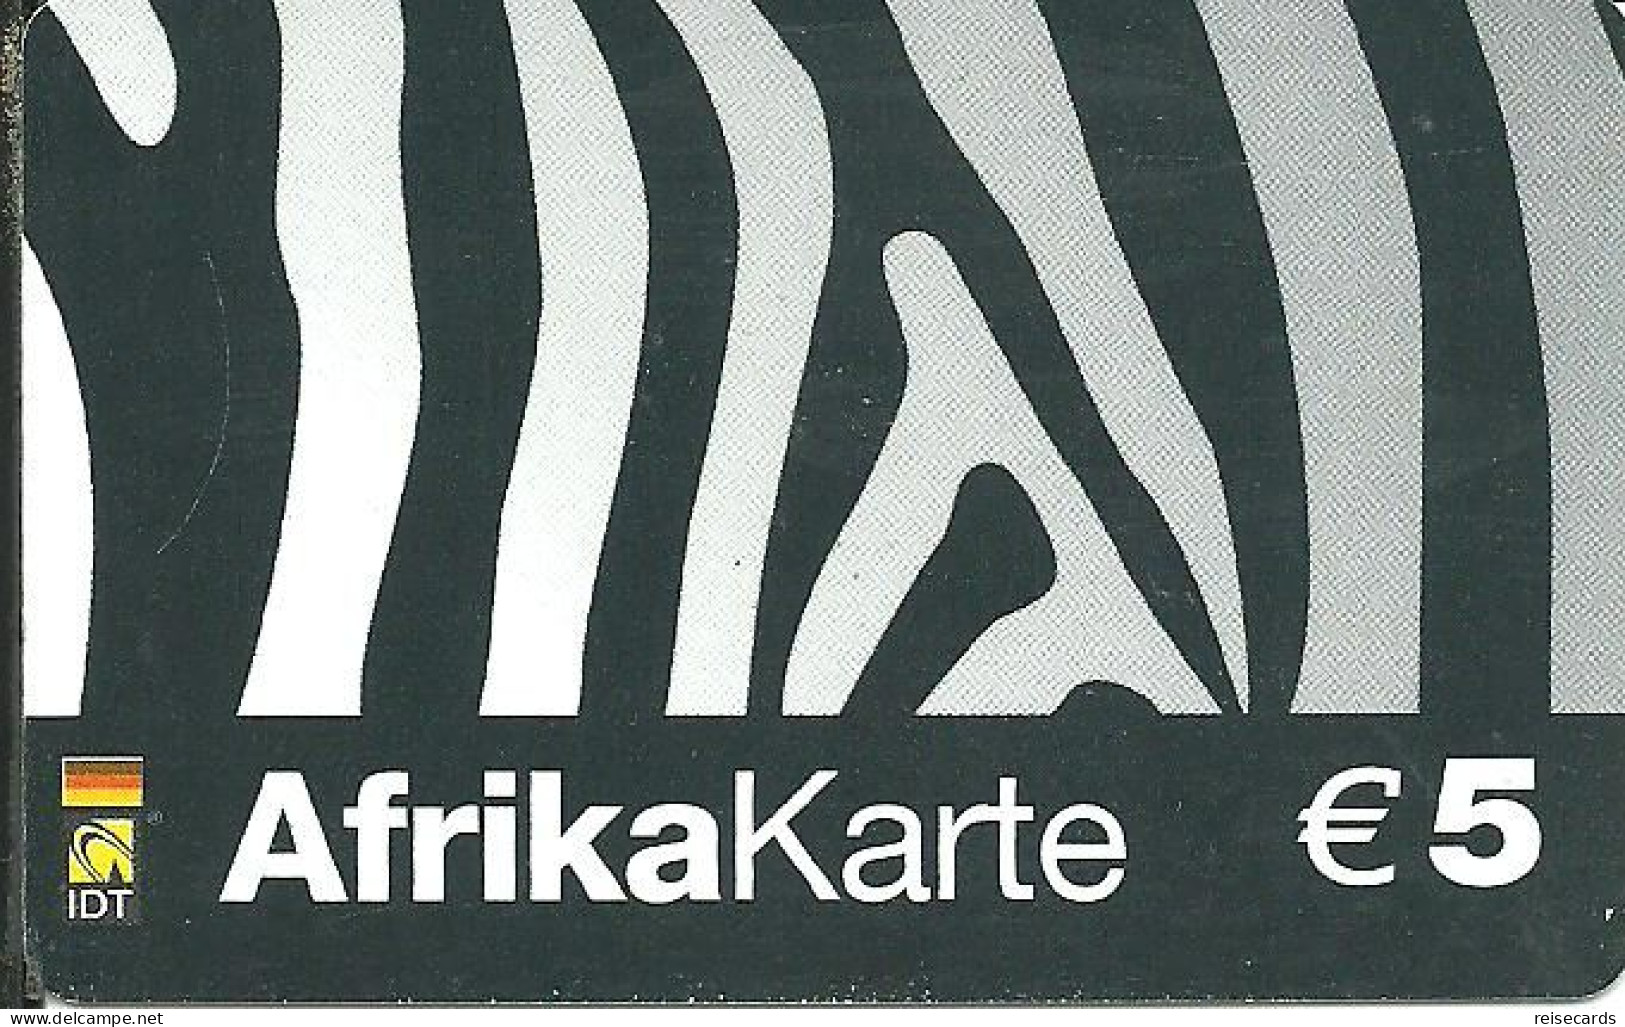 Germany: Prepaid IDT Afrika Karte 03.05 - Cellulari, Carte Prepagate E Ricariche